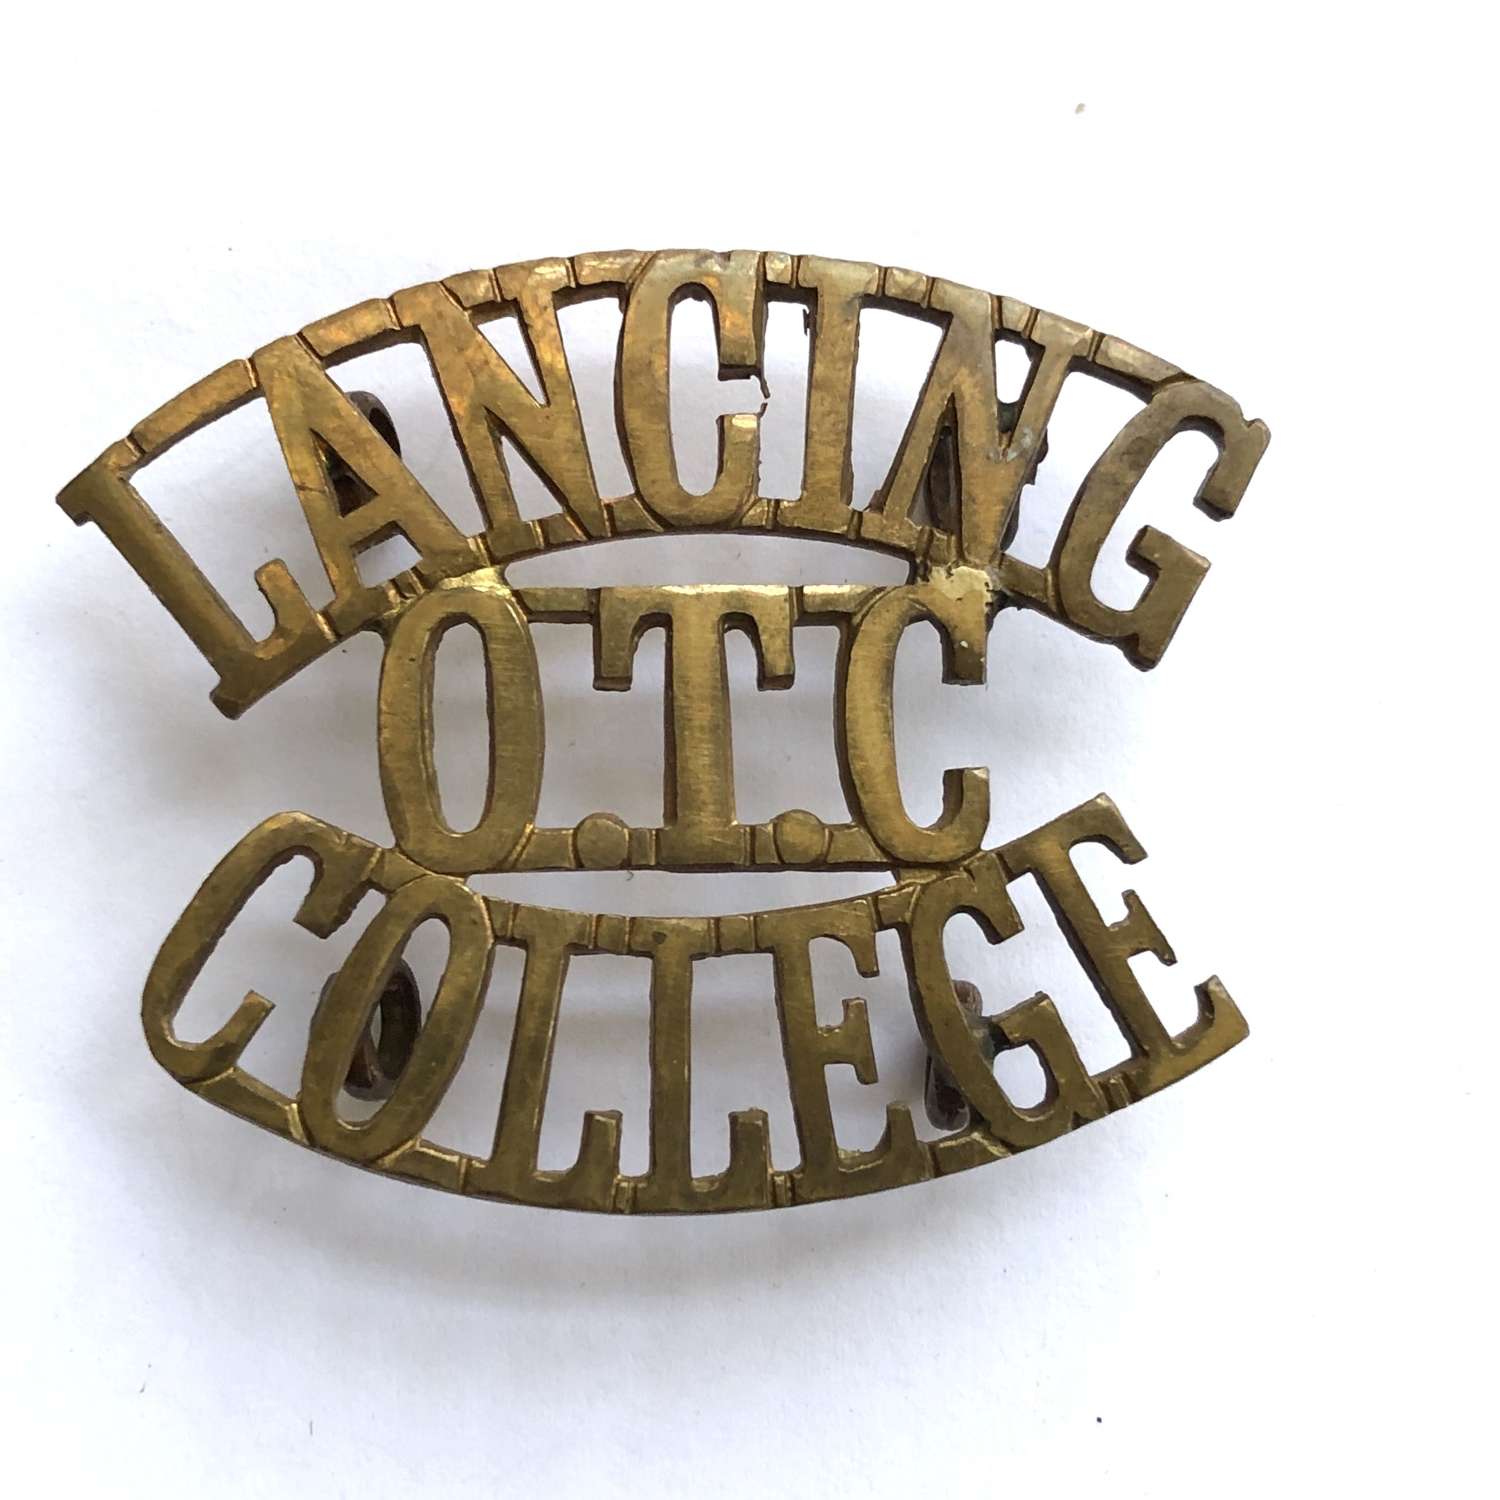 LANCING /OTC / COLLEGE Sussex shoulder title circa 1908-40